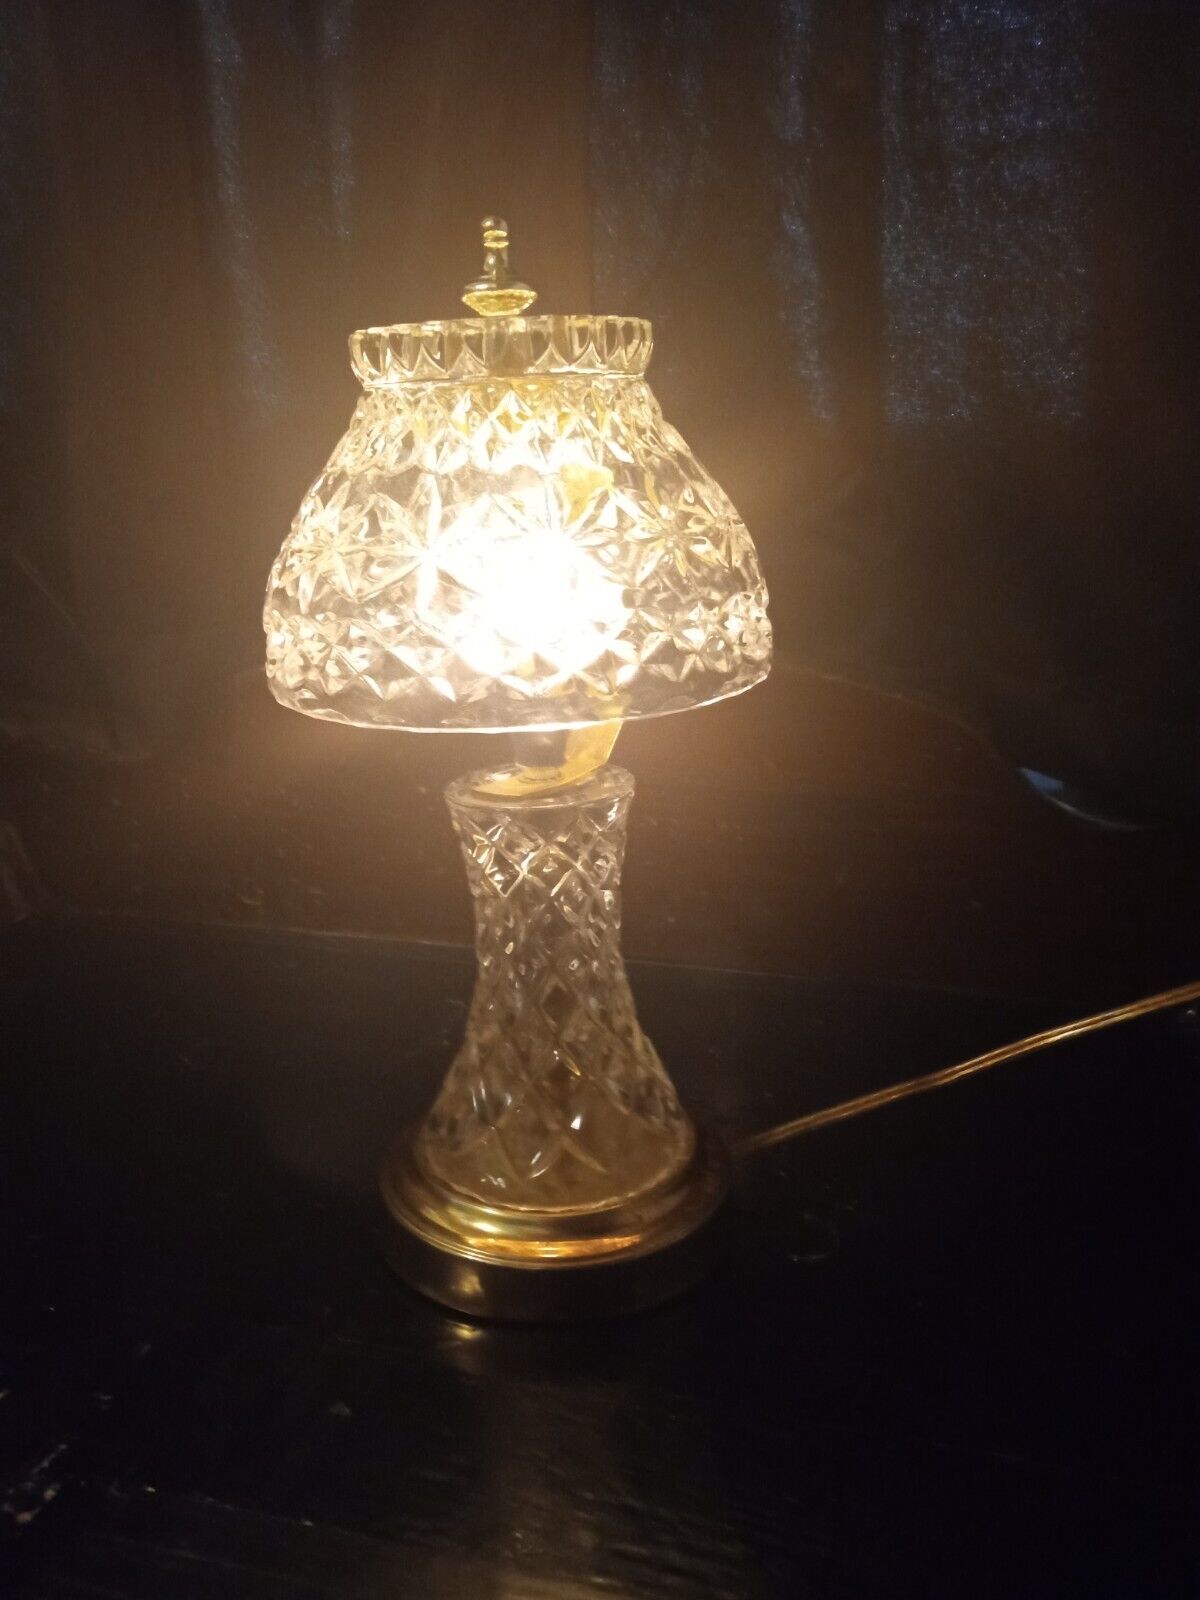 VINTAGE Lead Crystal Lamp Heavy Glass Vanity Boudoir Accent Nightlight 12.5